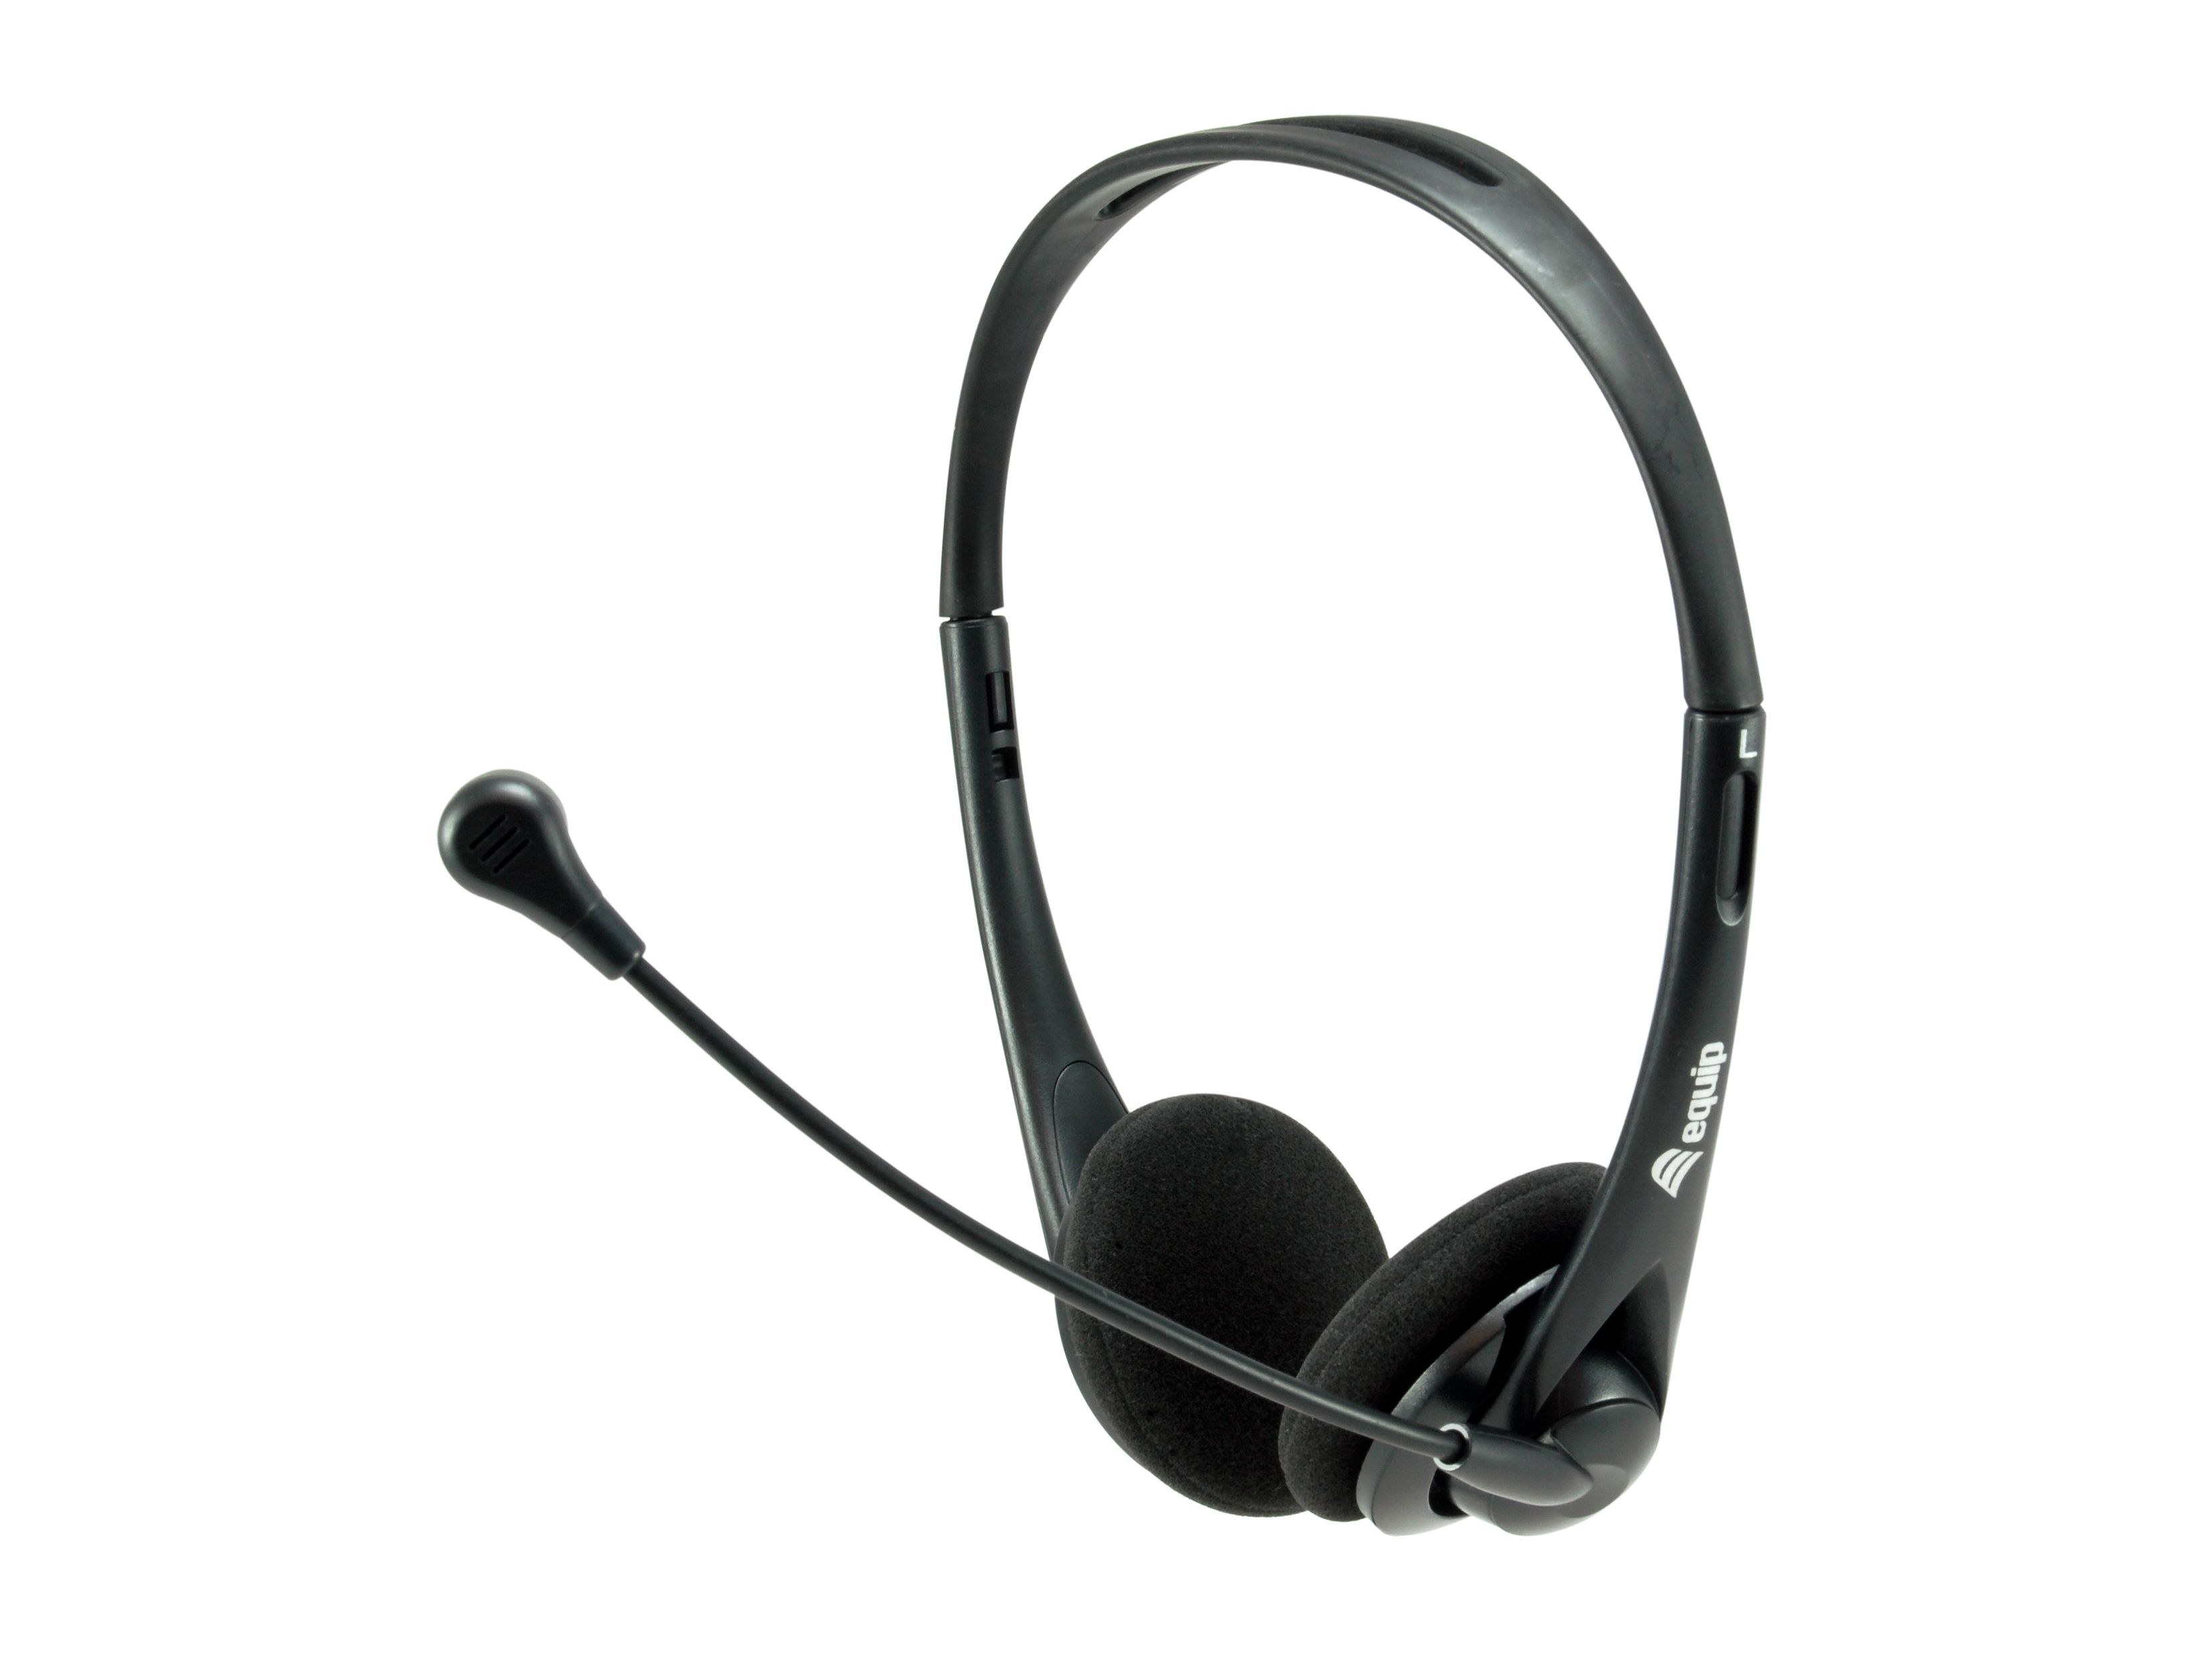 Equip 245304 - Headset - On-Ear - kabelgebunden